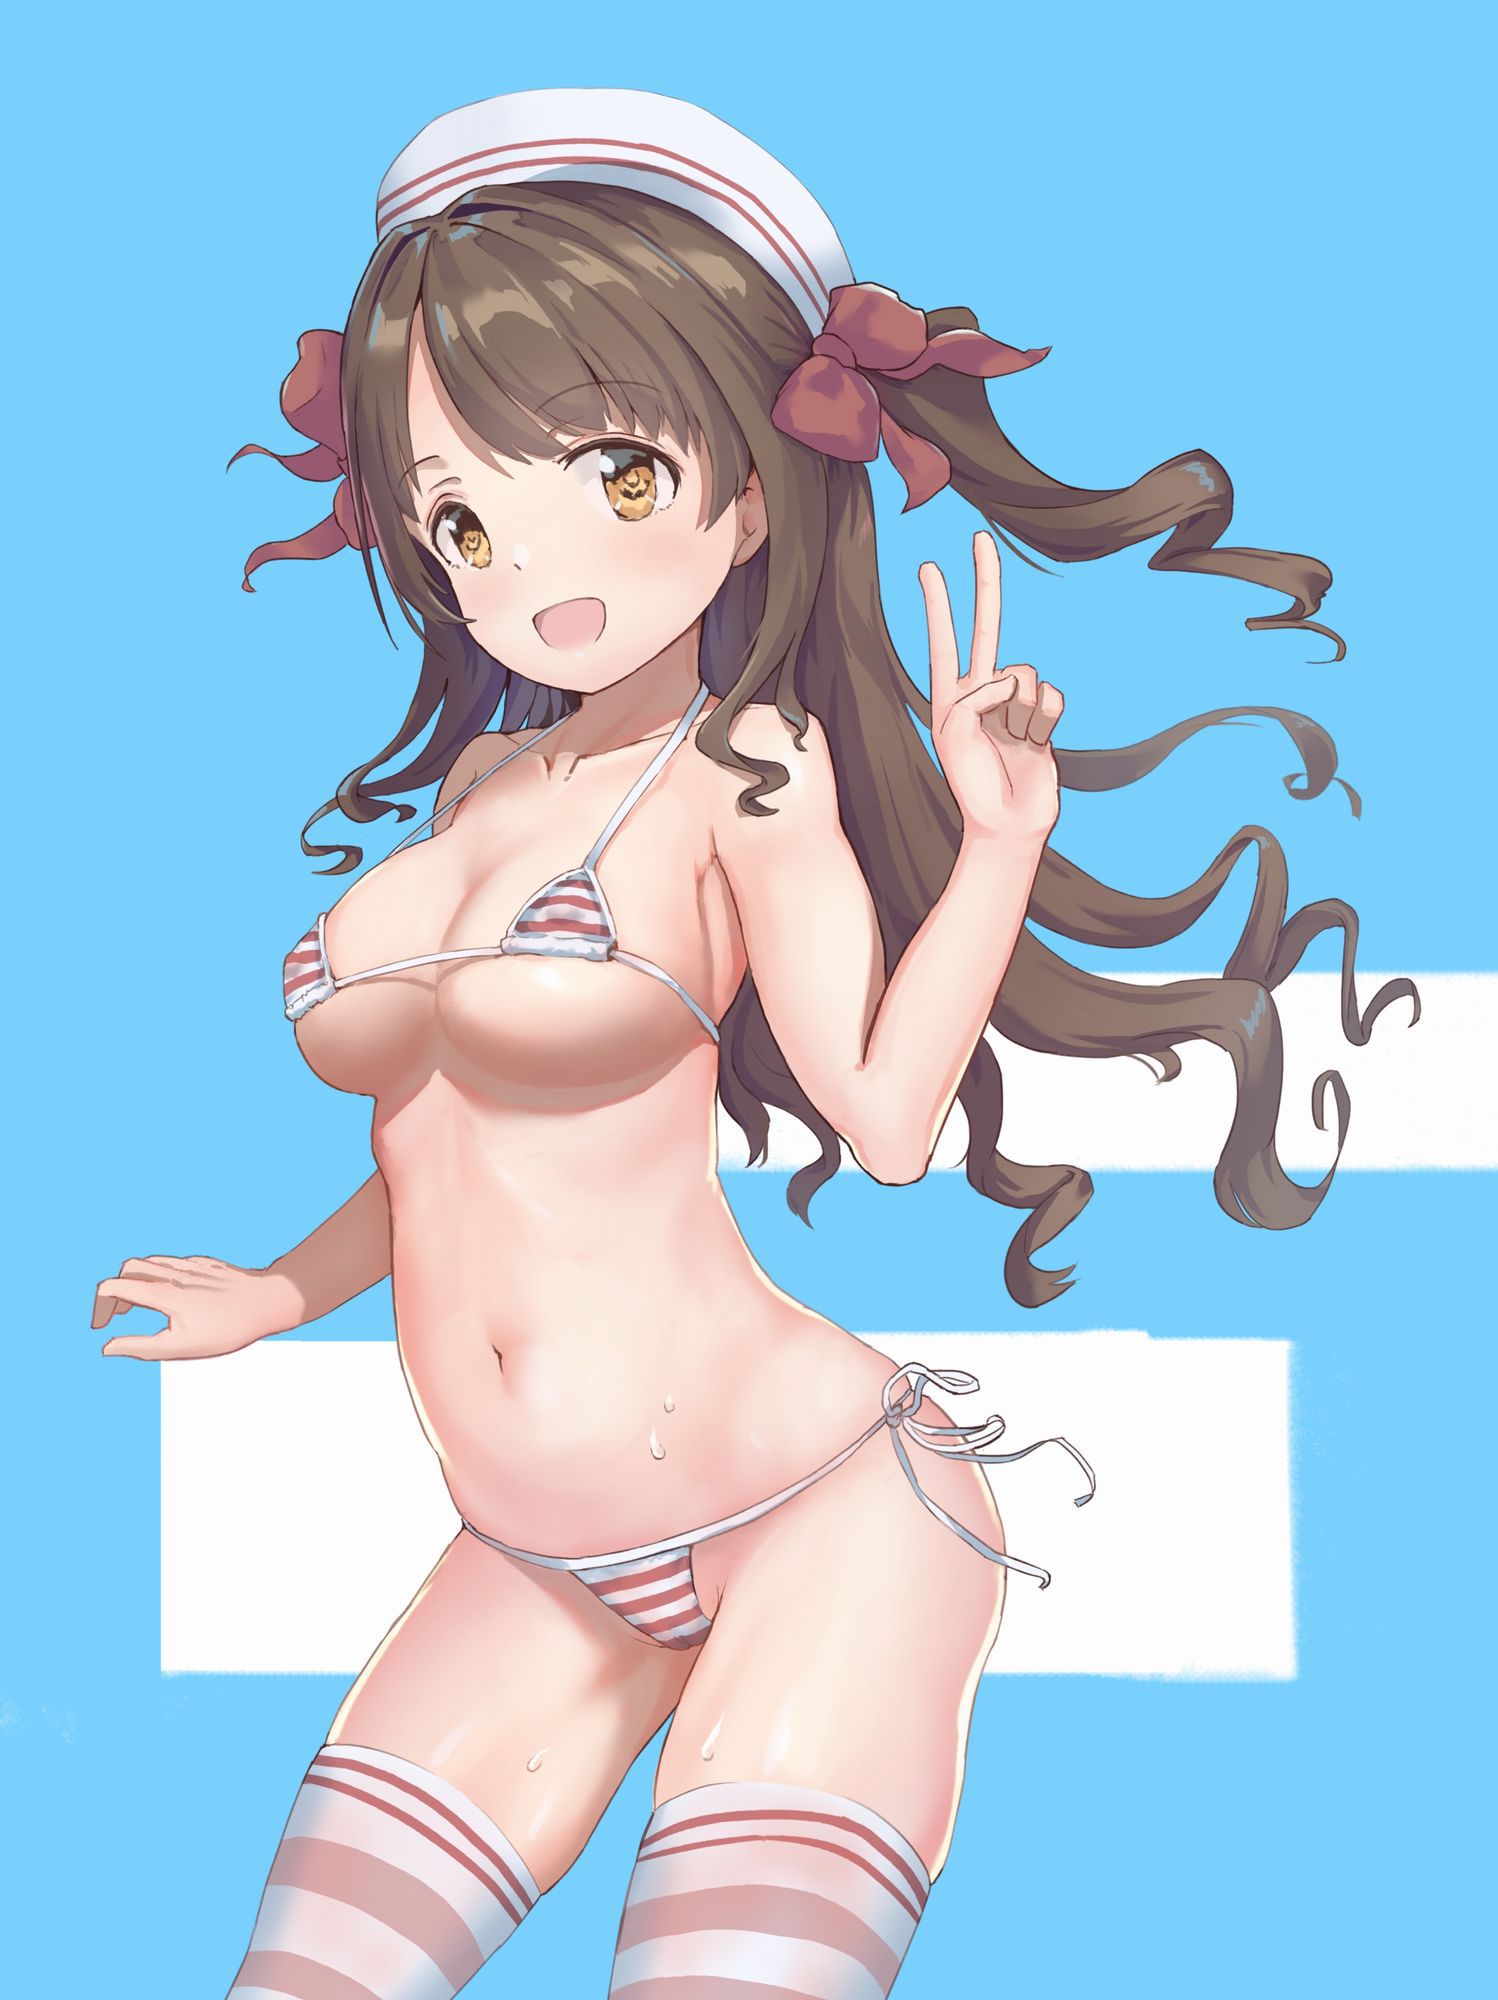 [Secondary, ZIP] beautiful girl image of micro bikini that porori when a little 46